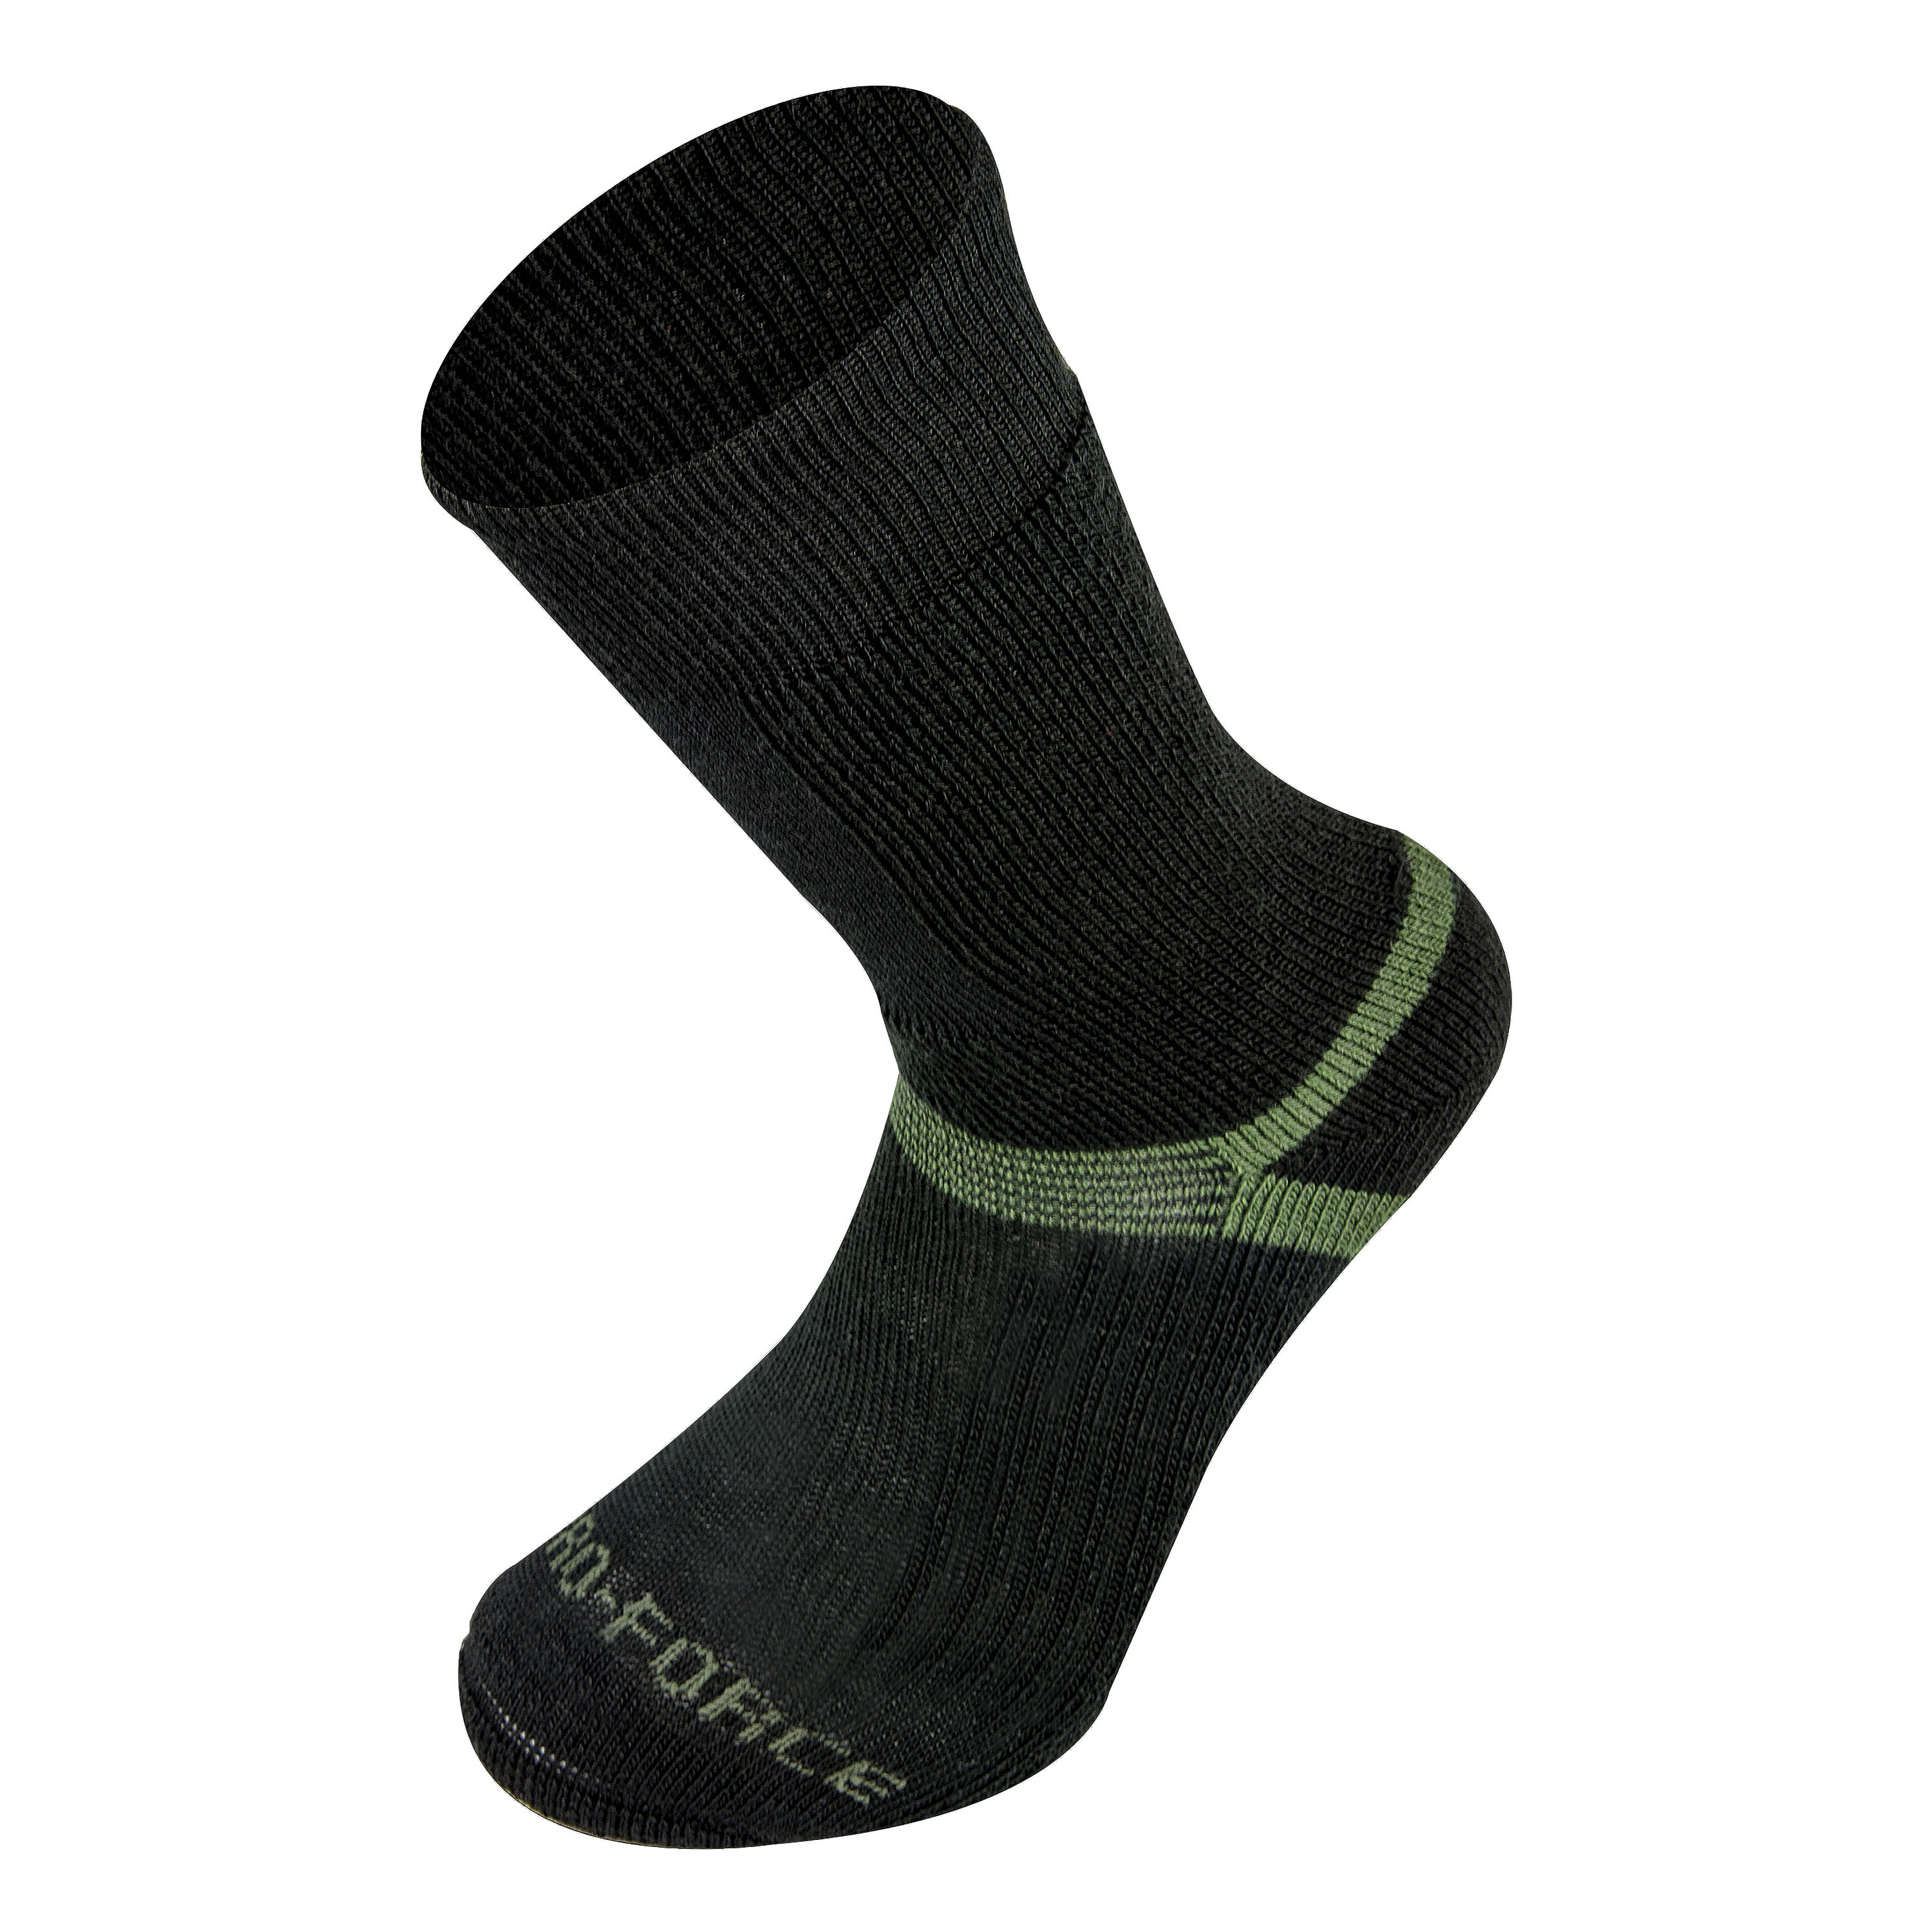 Purchase the Highlander Sock Taskforce black by ASMC